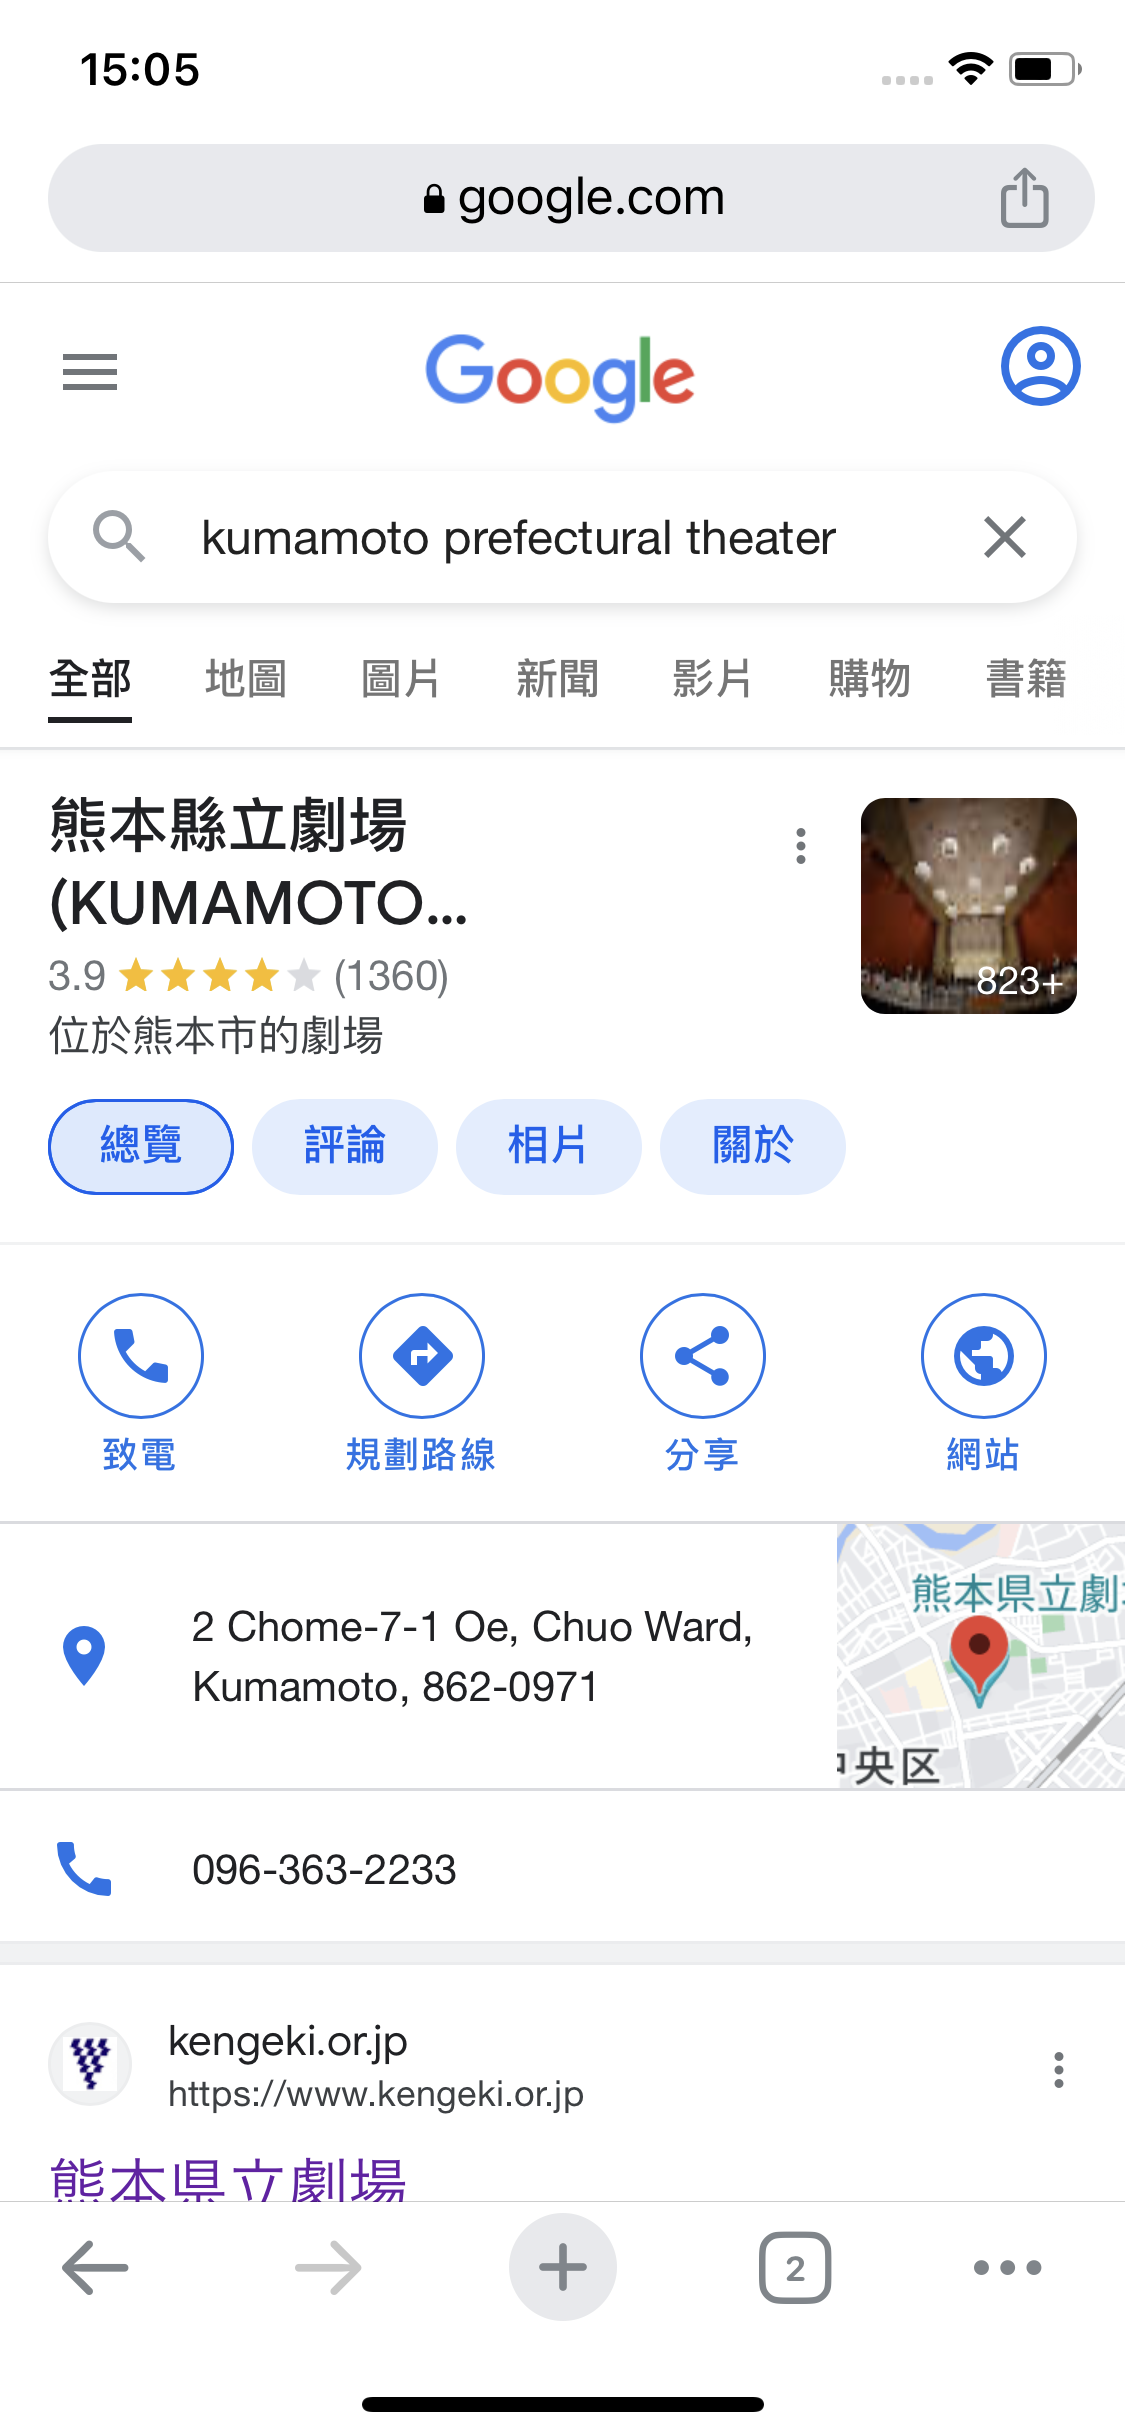 Search kumamoto prefectural theater